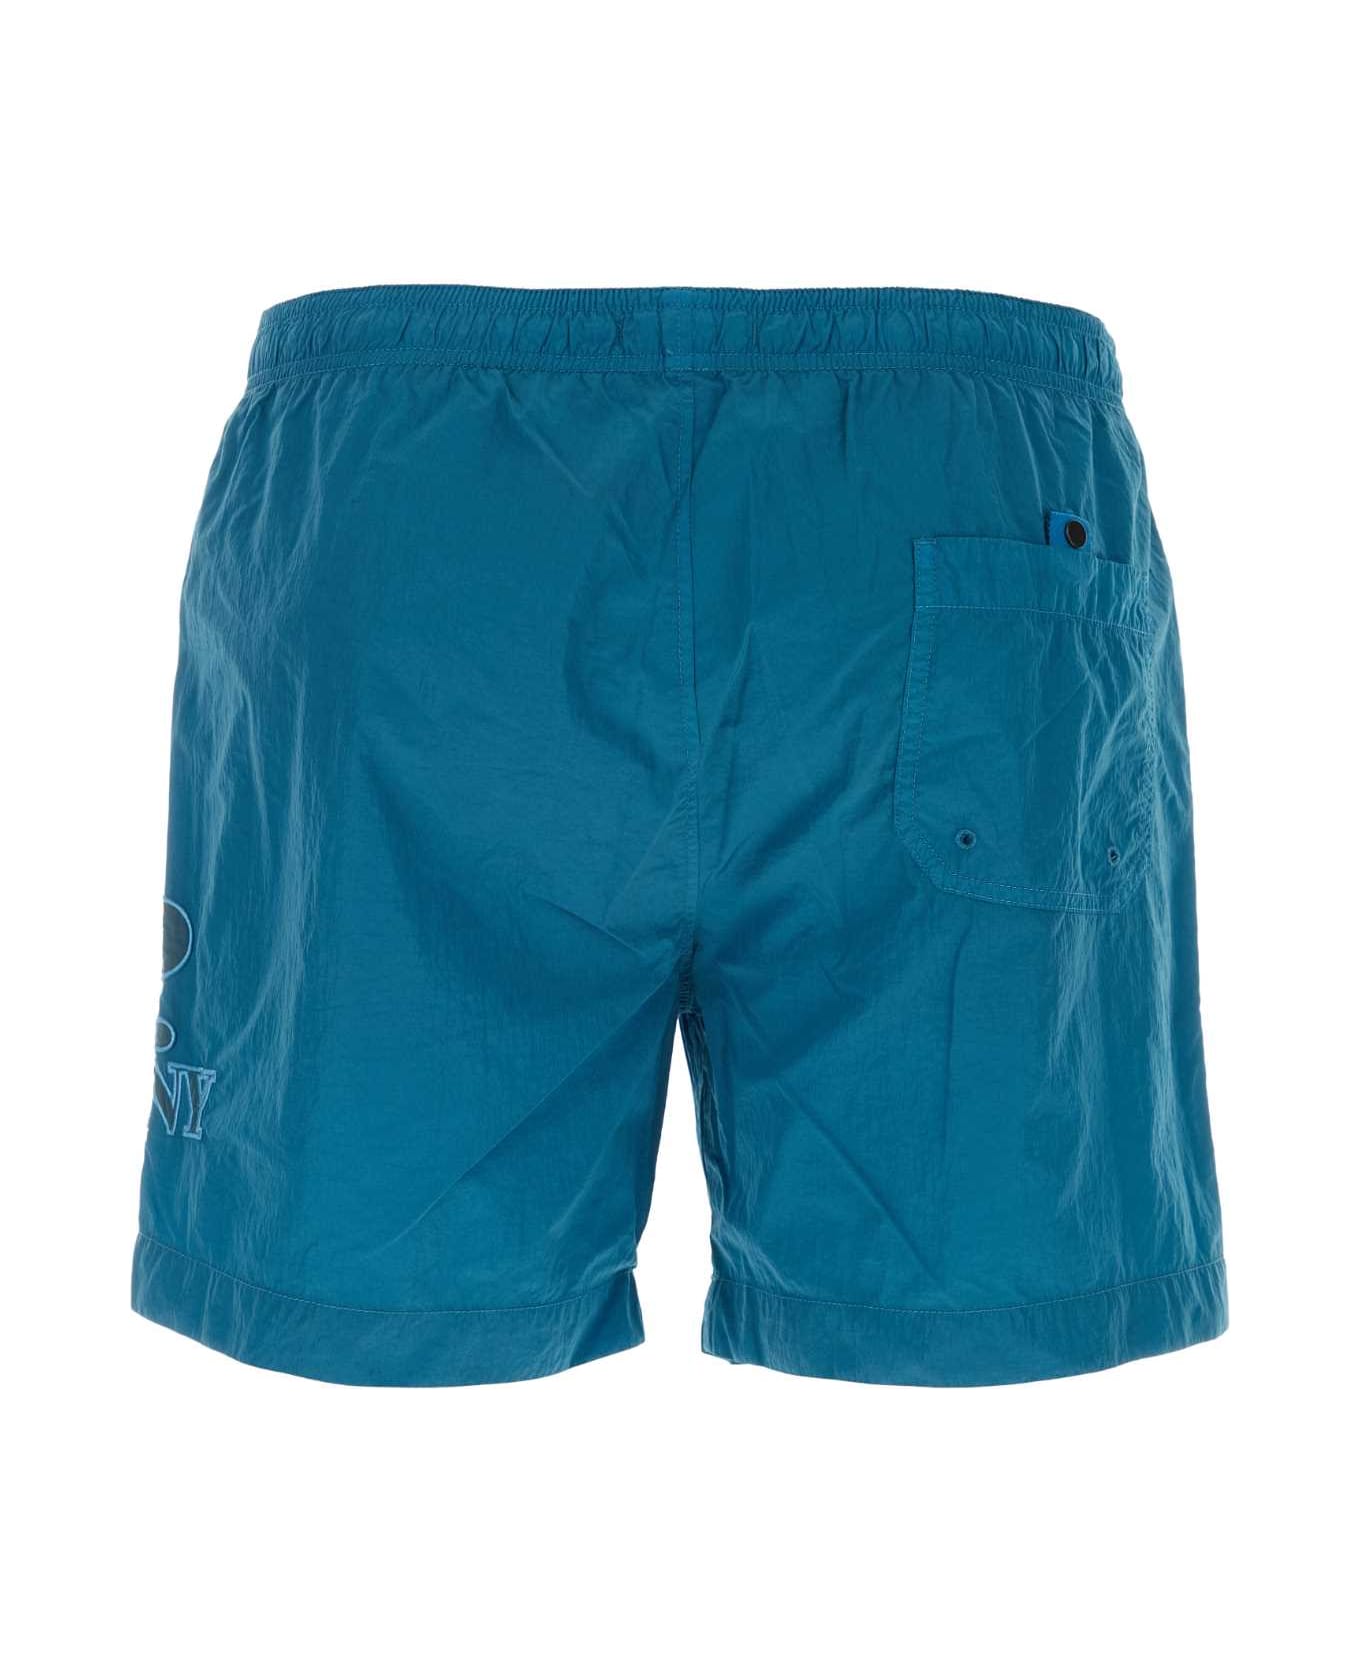 C.P. Company Air Force Blue Nylon Swimming Shorts - INKBLUE